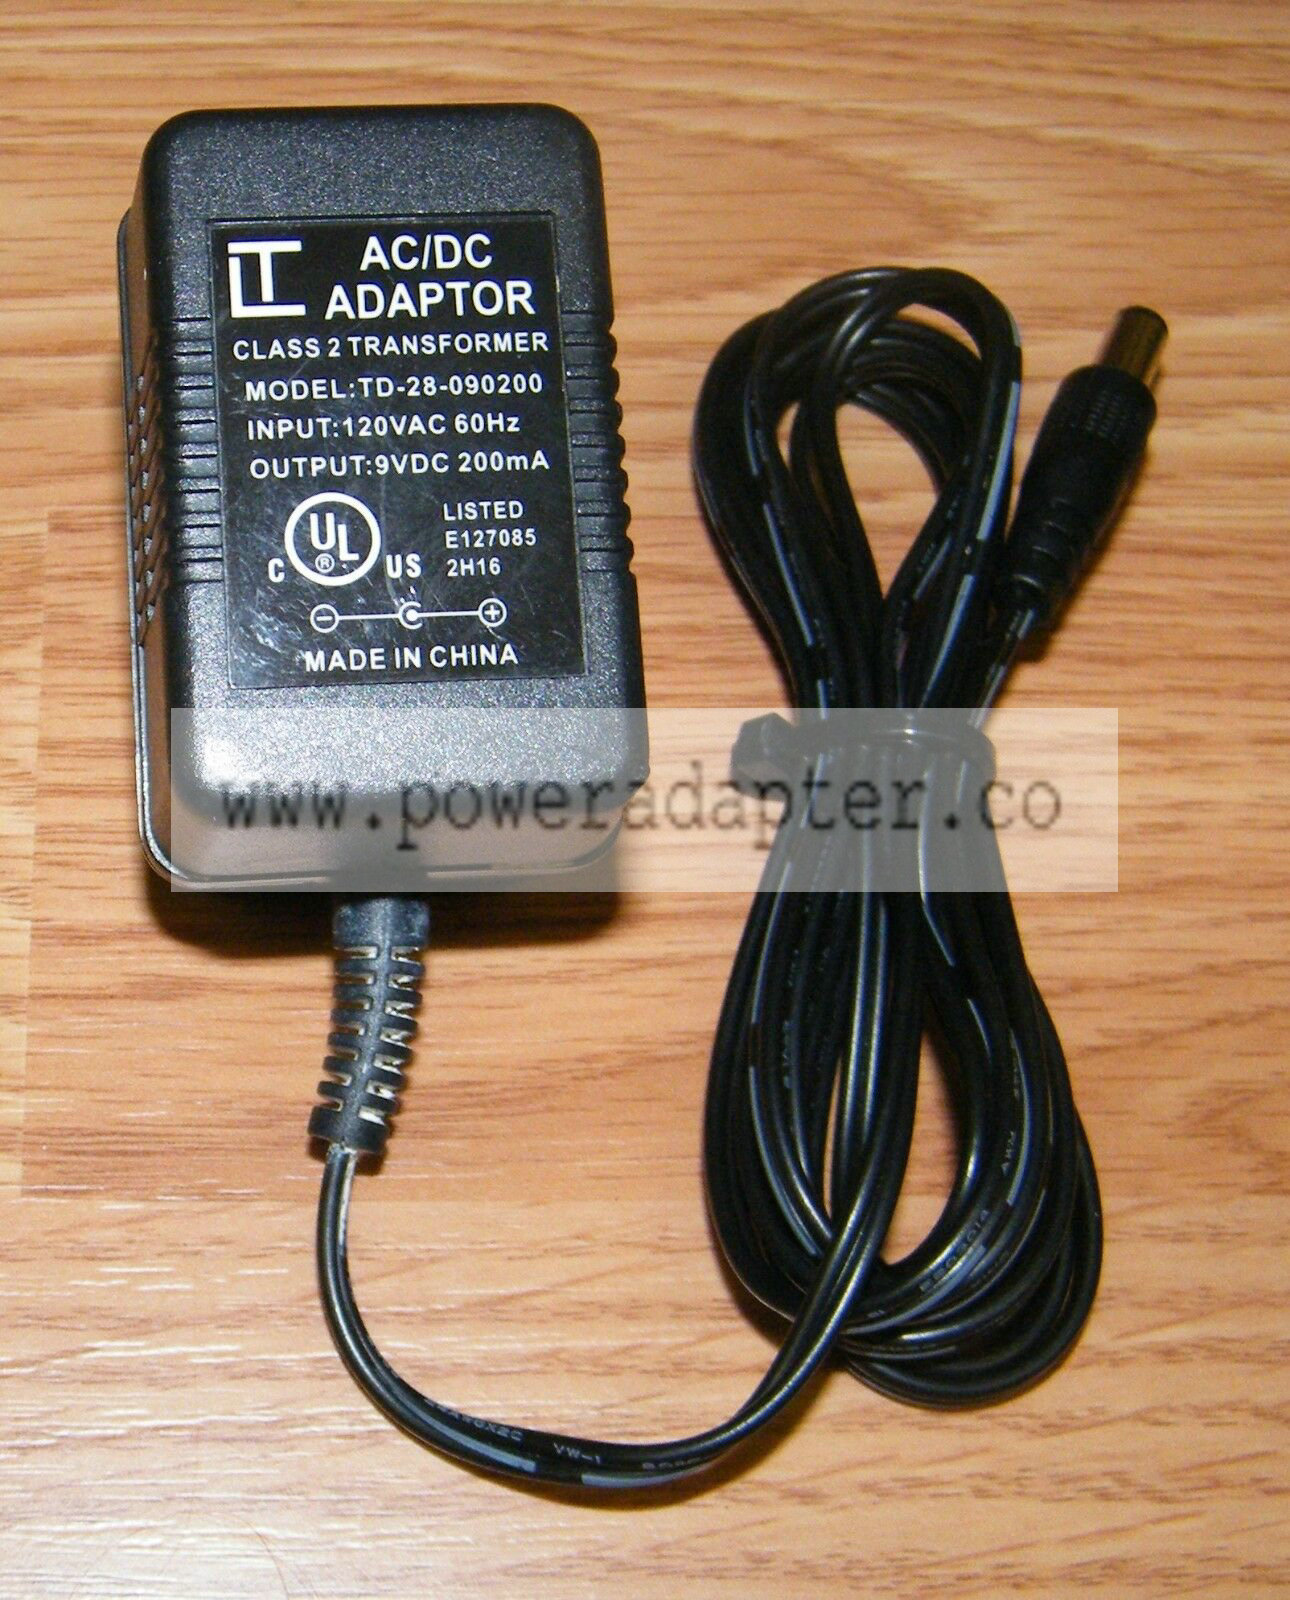 Genuine LT (TD-28-090200) 9V 200mA 60Hz AC/DC Adapter Power Supply Charger Bundle Listing: No Output Voltage: 9V Mo